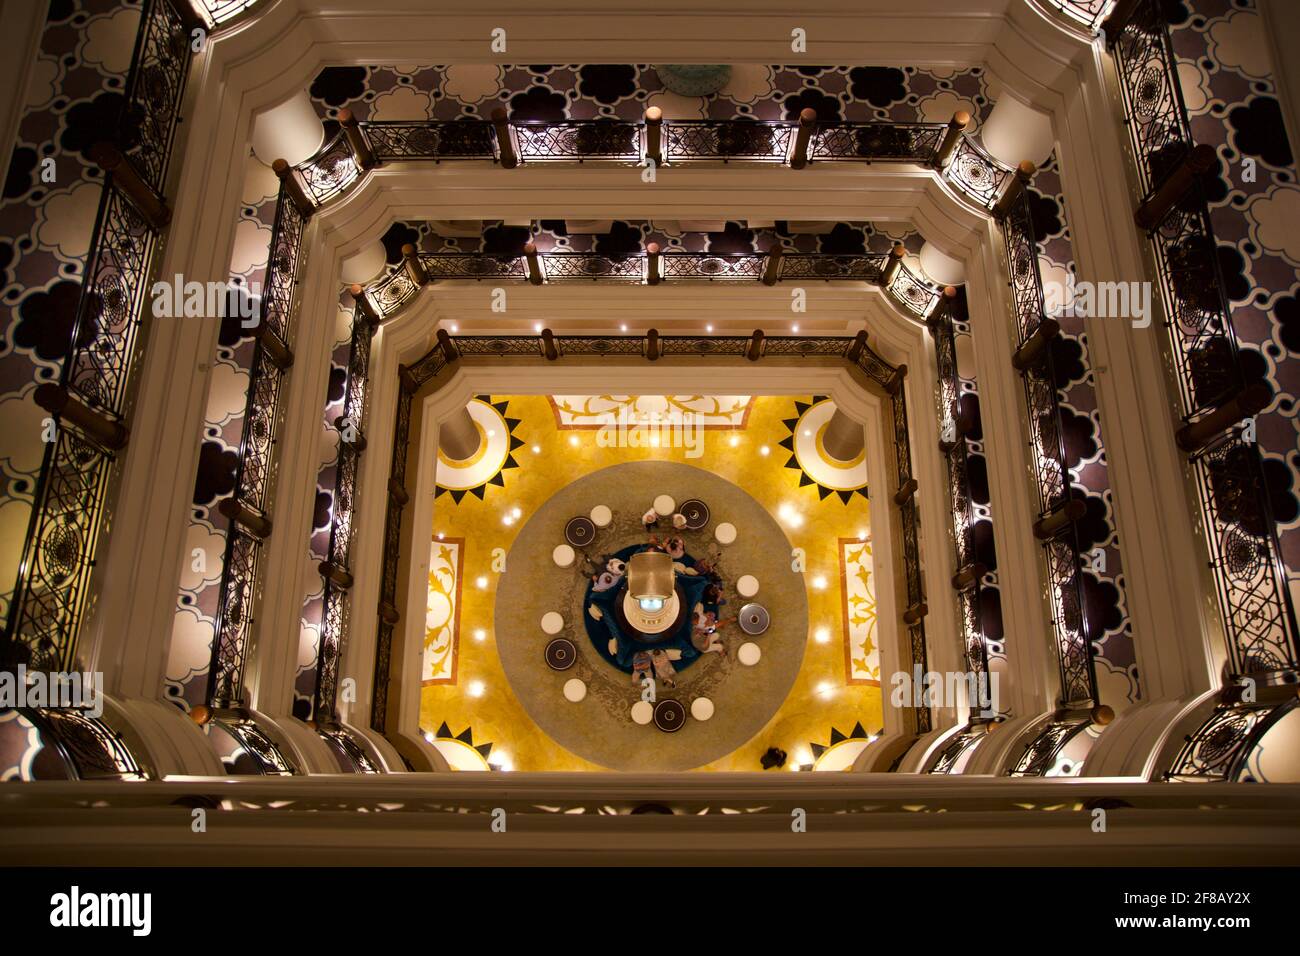 RAS AL KHAIMAH, UNITED ARAB EMIRATES - JUN 13, 2019: Bright and modern interior of luxury lobby in an opulent Arabian style 5-star hotel Waldorf Stock Photo